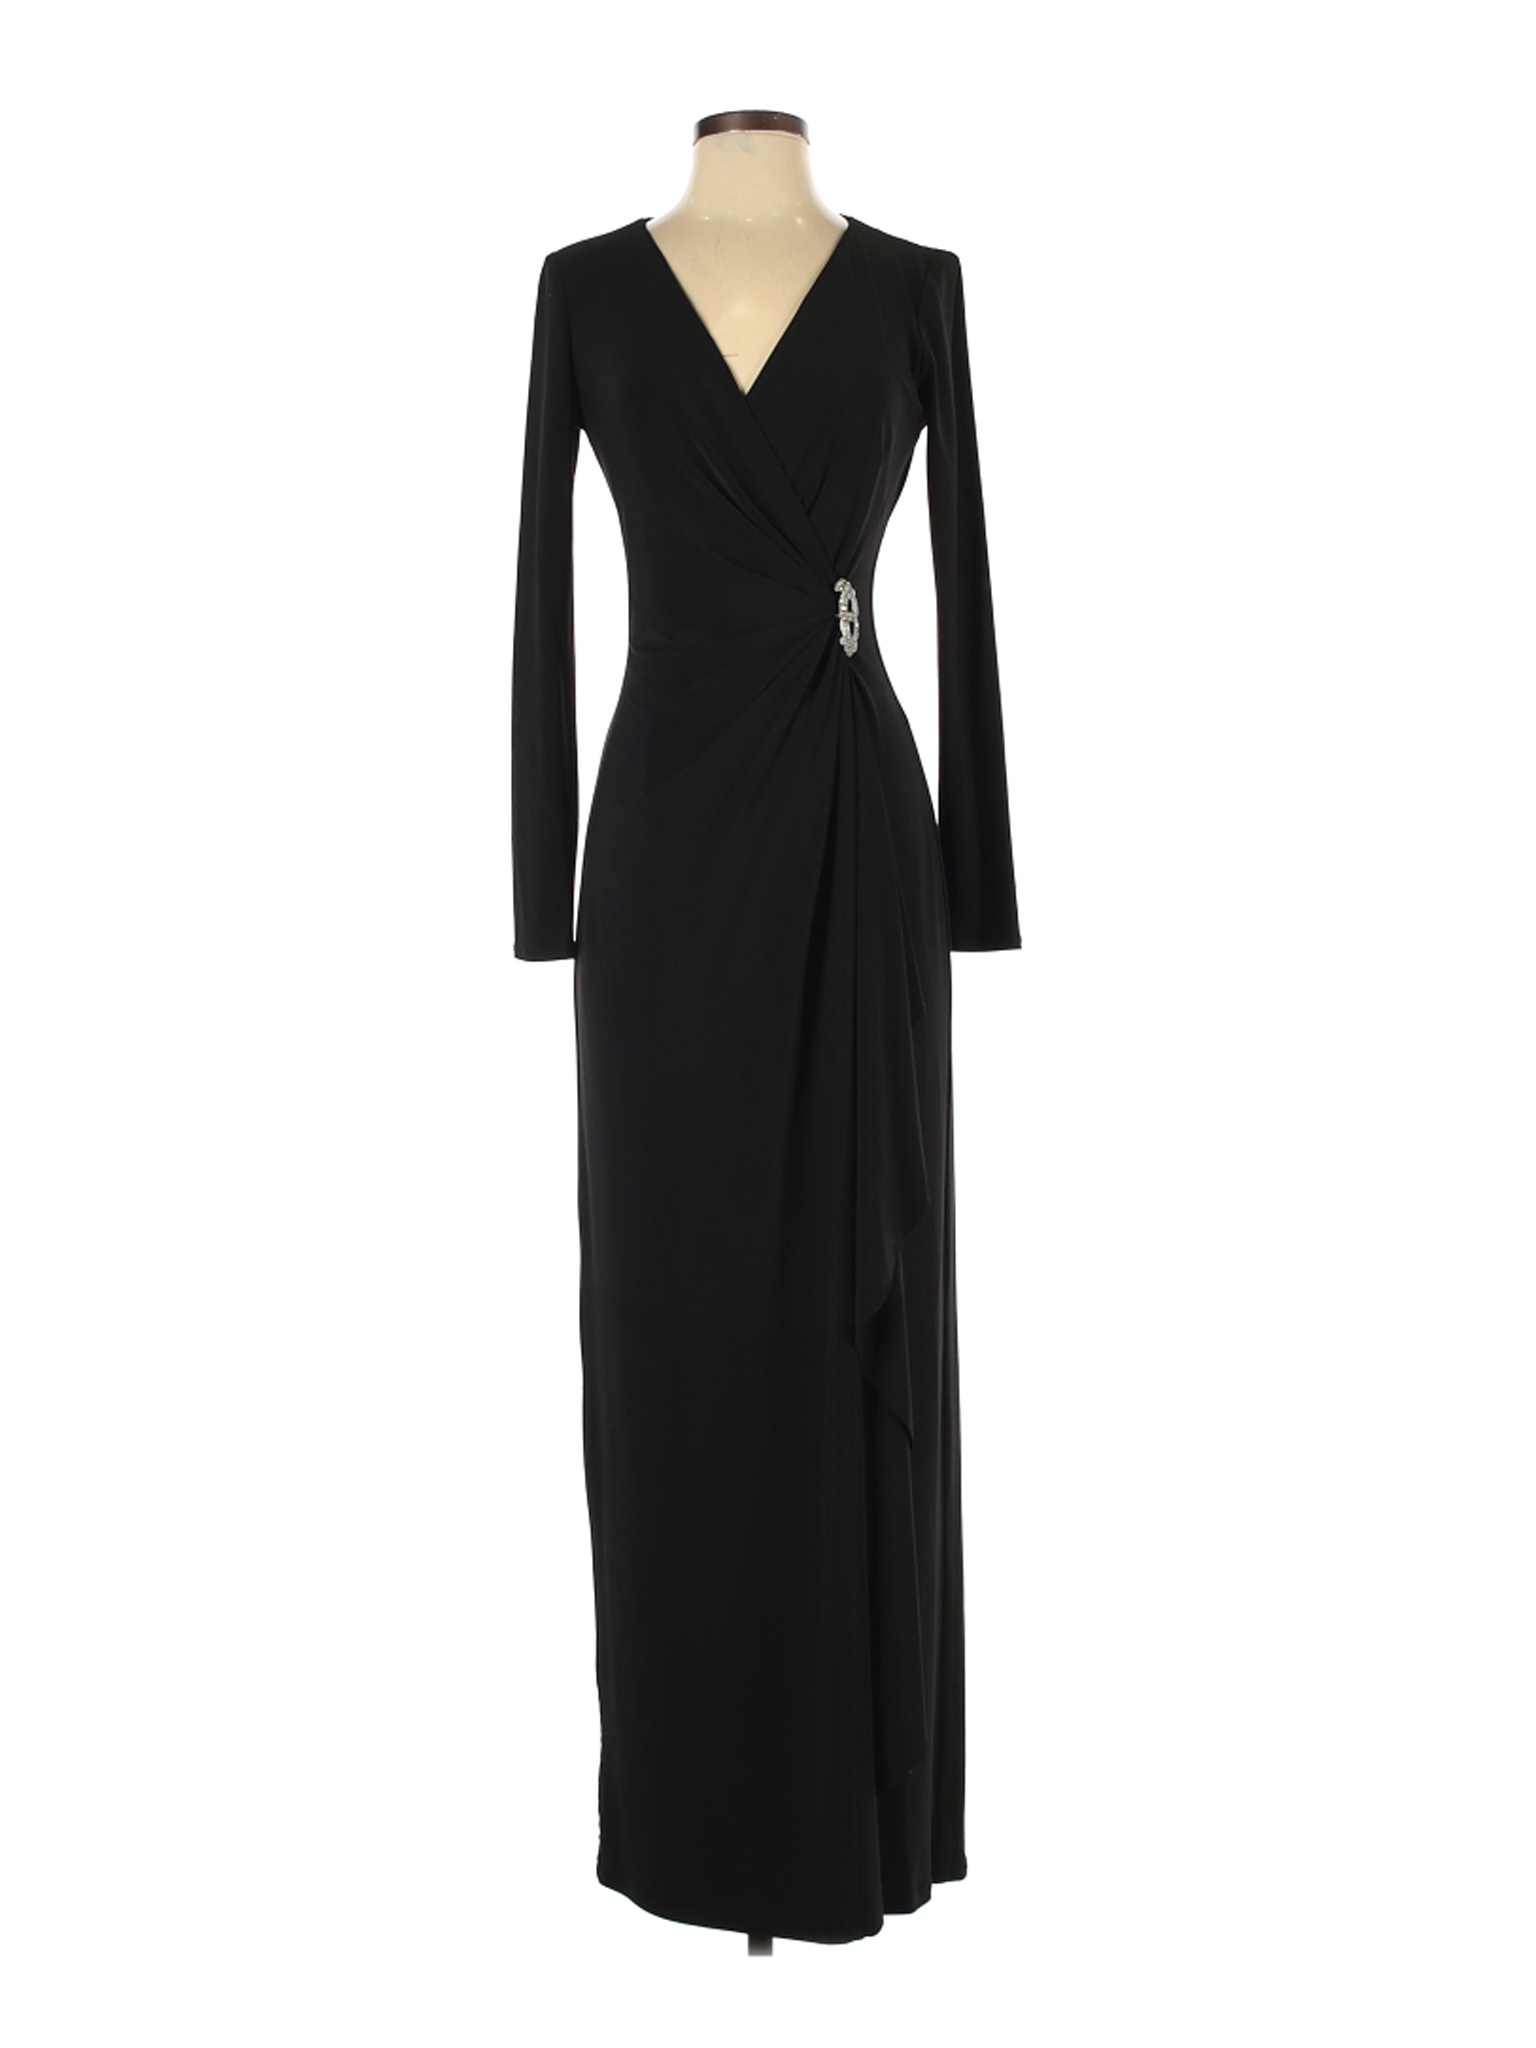 Lauren by Ralph Lauren Women Black Cocktail Dress 4 | eBay